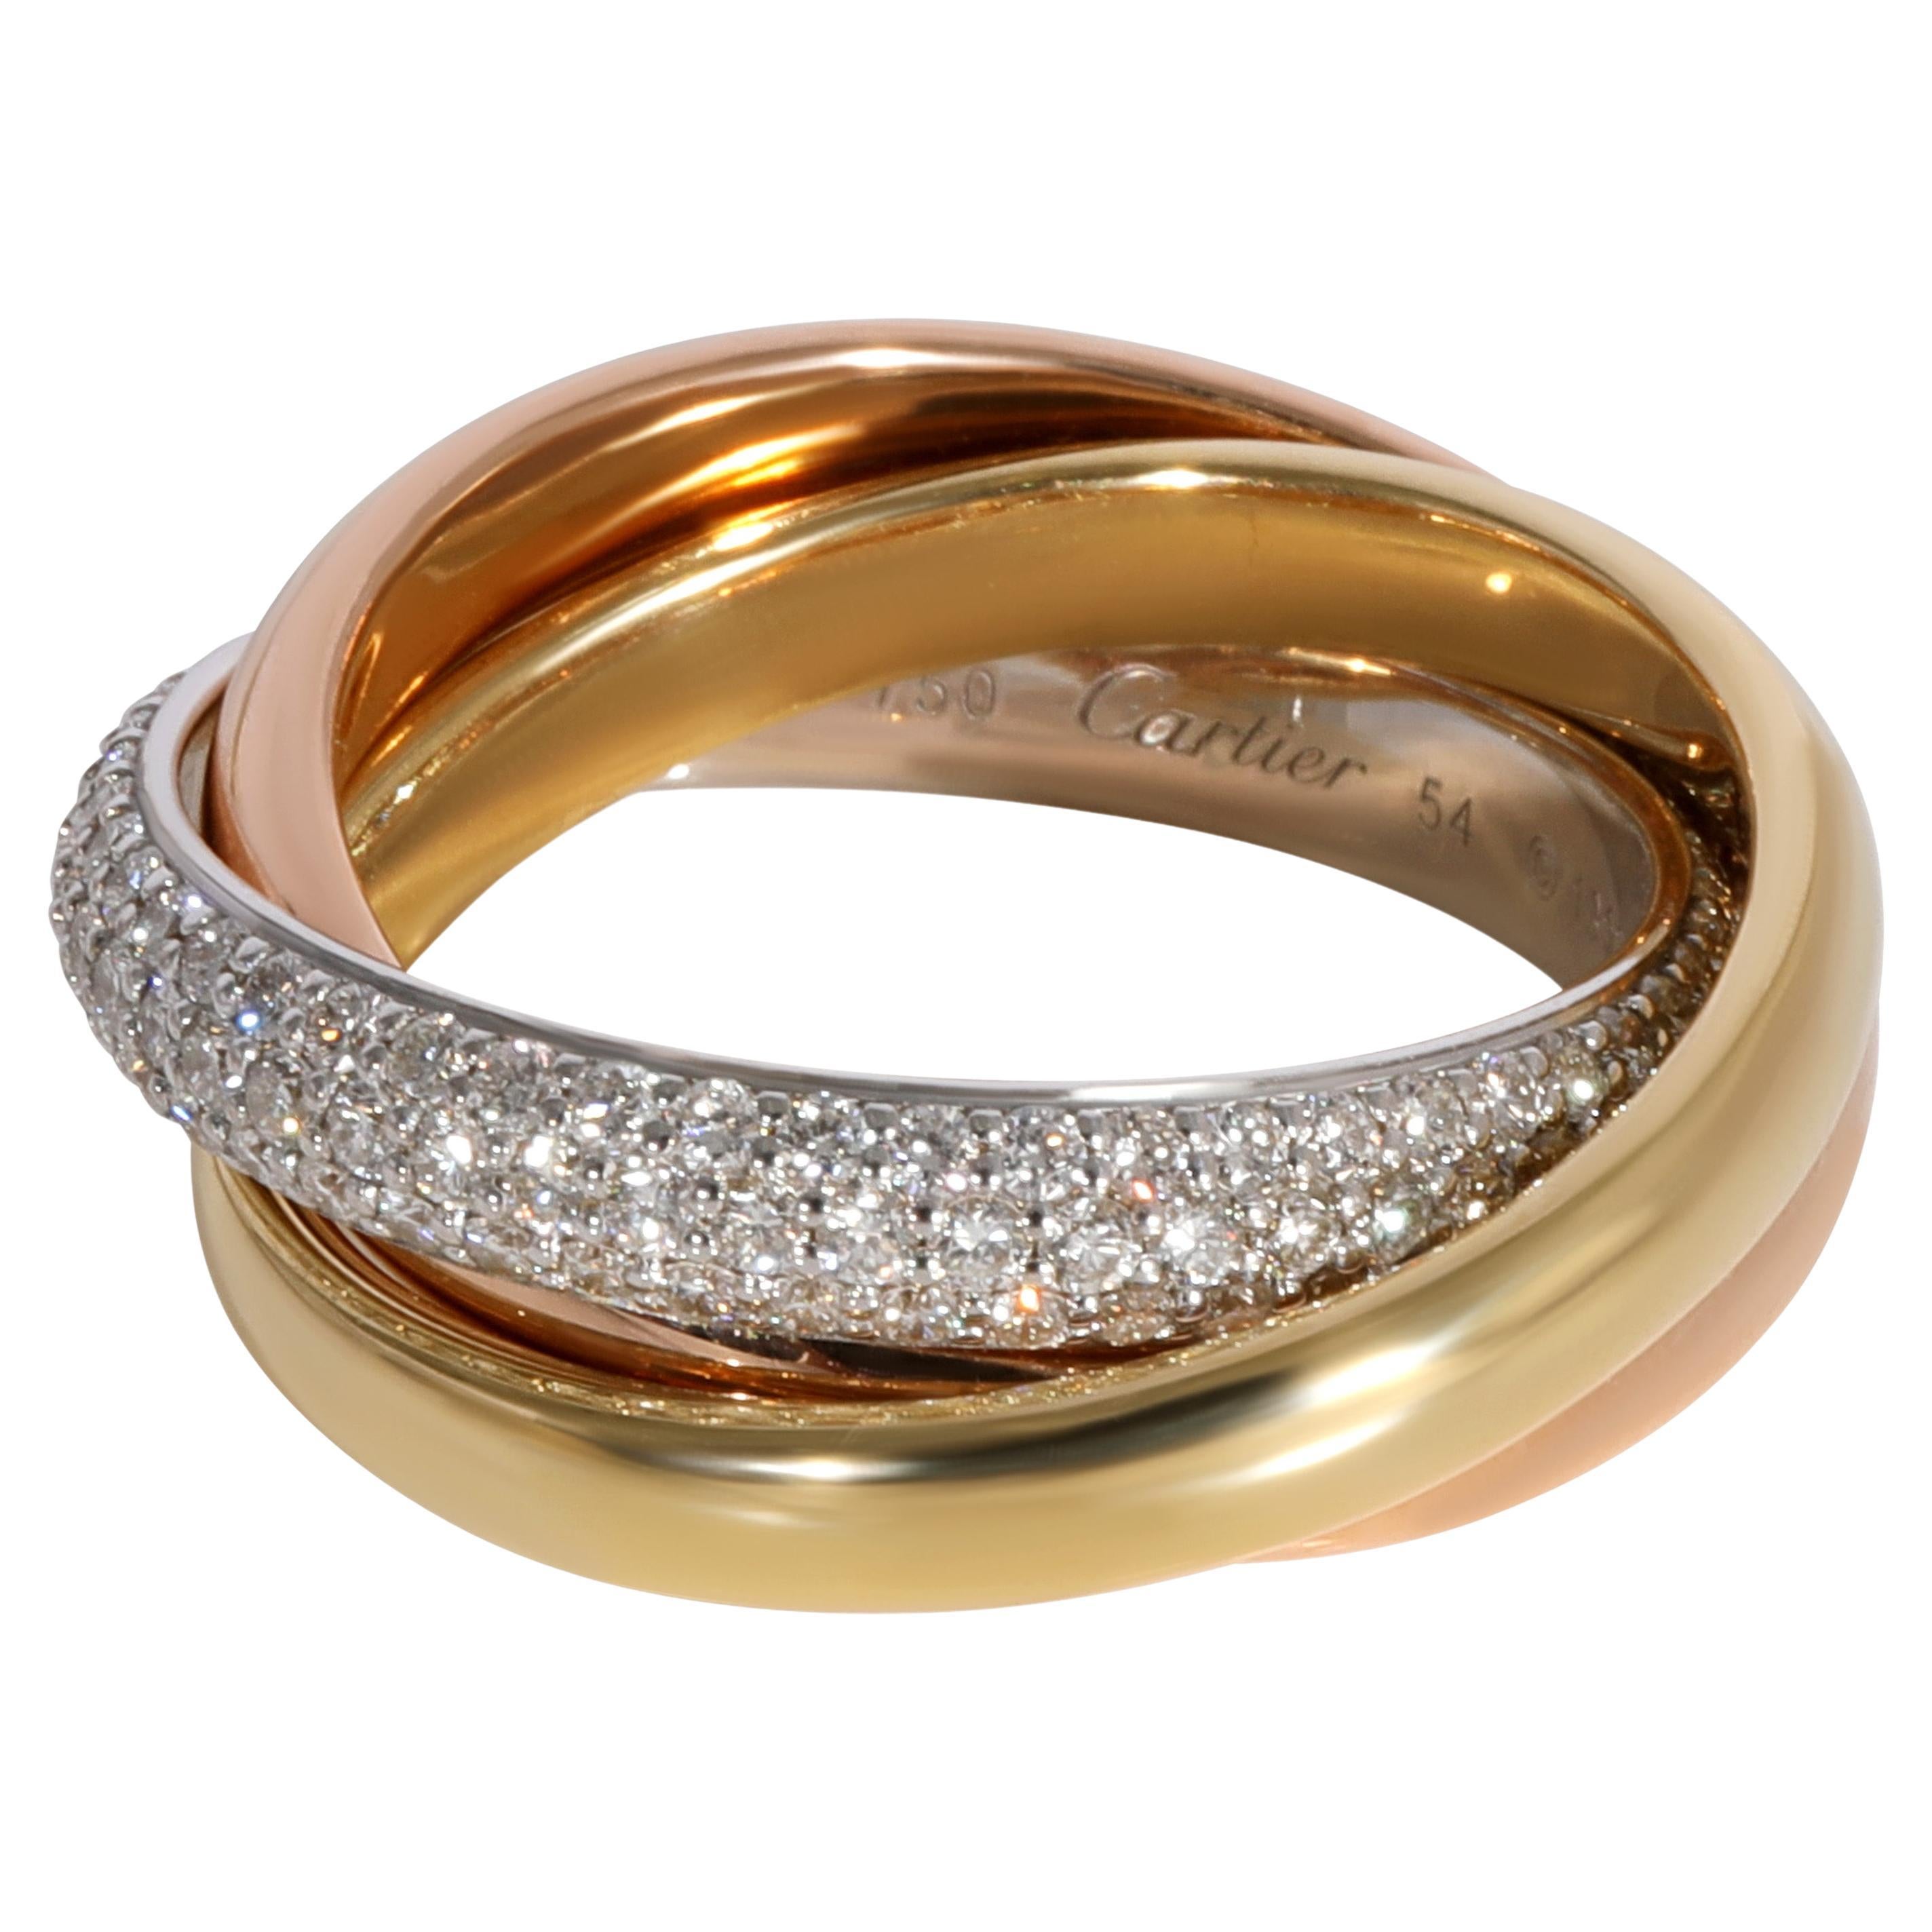 Cartier Trinity Diamond Ring in 18K 3 Tone Gold 0.99 Ctw